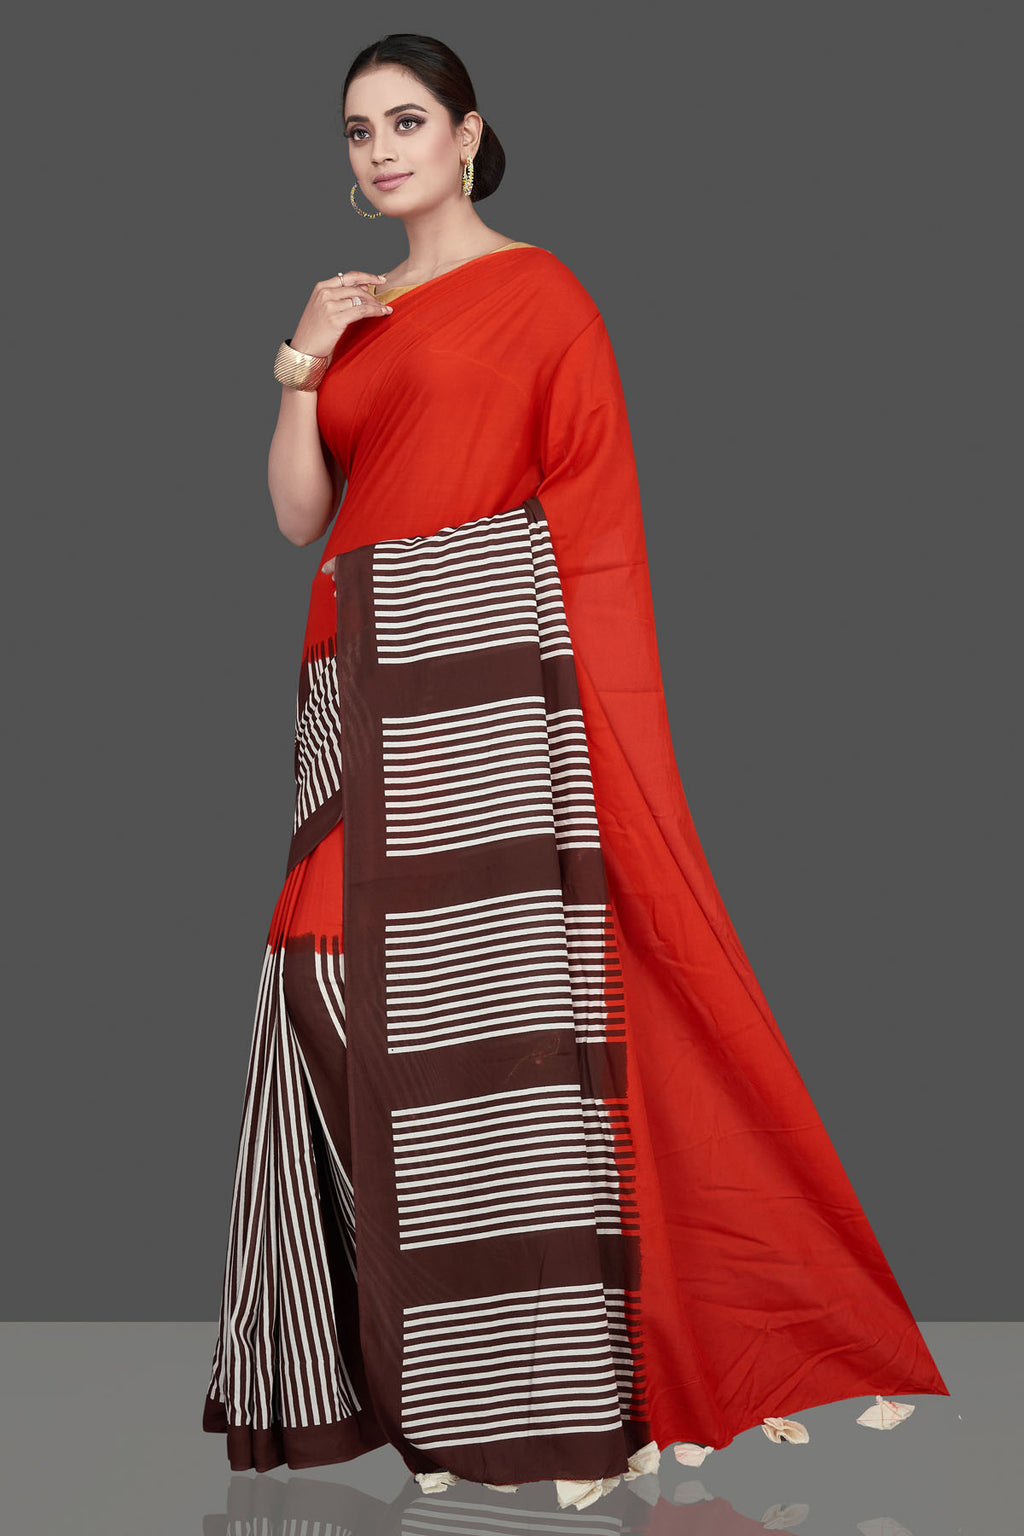 Shop stunning red and brown striped modal silk sari online in USA. Be the highlight of the occasion in beautiful pure silk saree, designer saris, handloom sarees, embroidered sarees, Kanchipuram sarees, Banarasi saris from Pure Elegance Indian saree store in USA.-full view